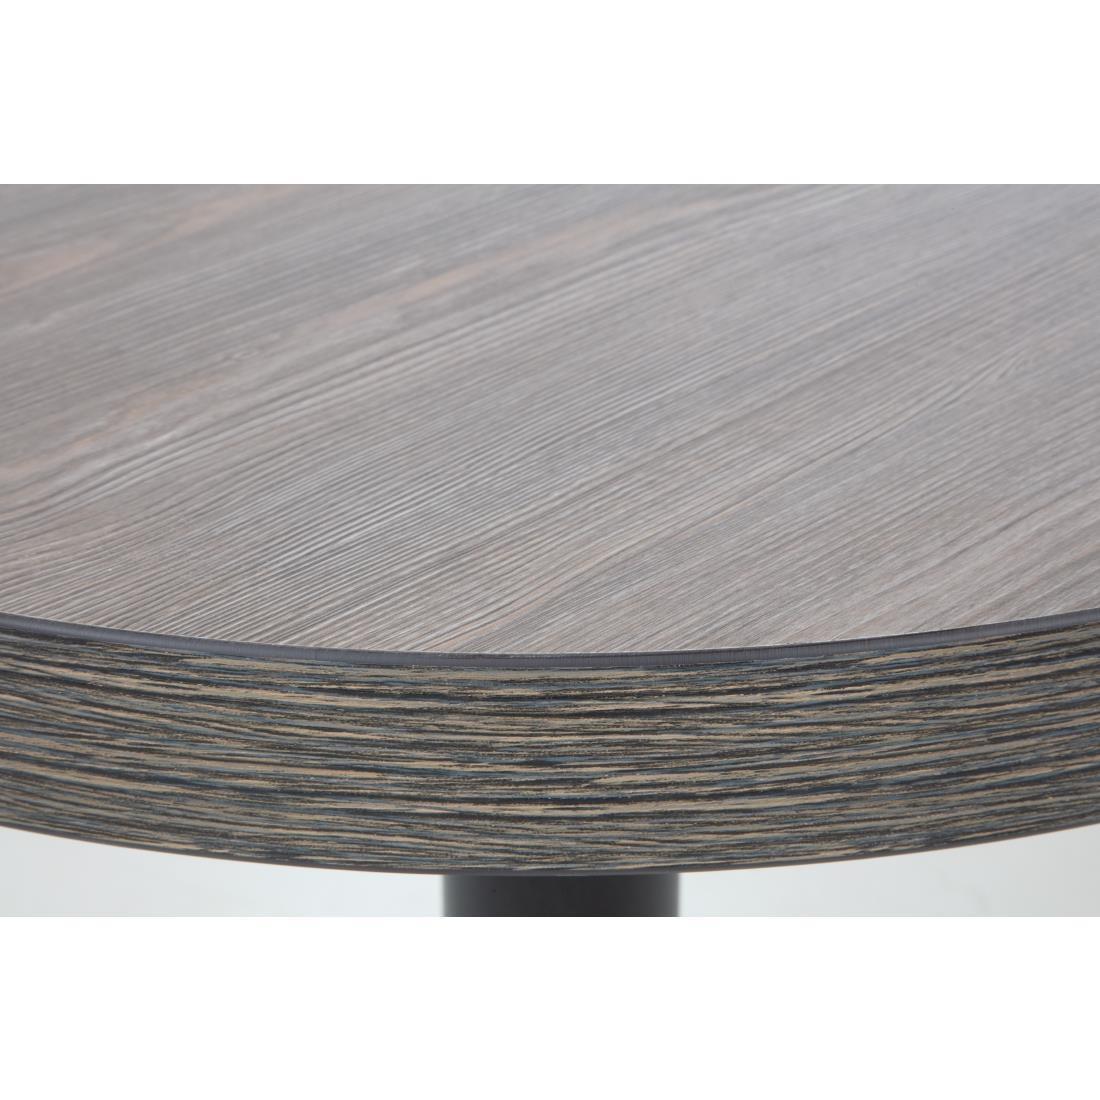 Bolero Round Table Top Vintage Wood 600mm - GR326  - 7